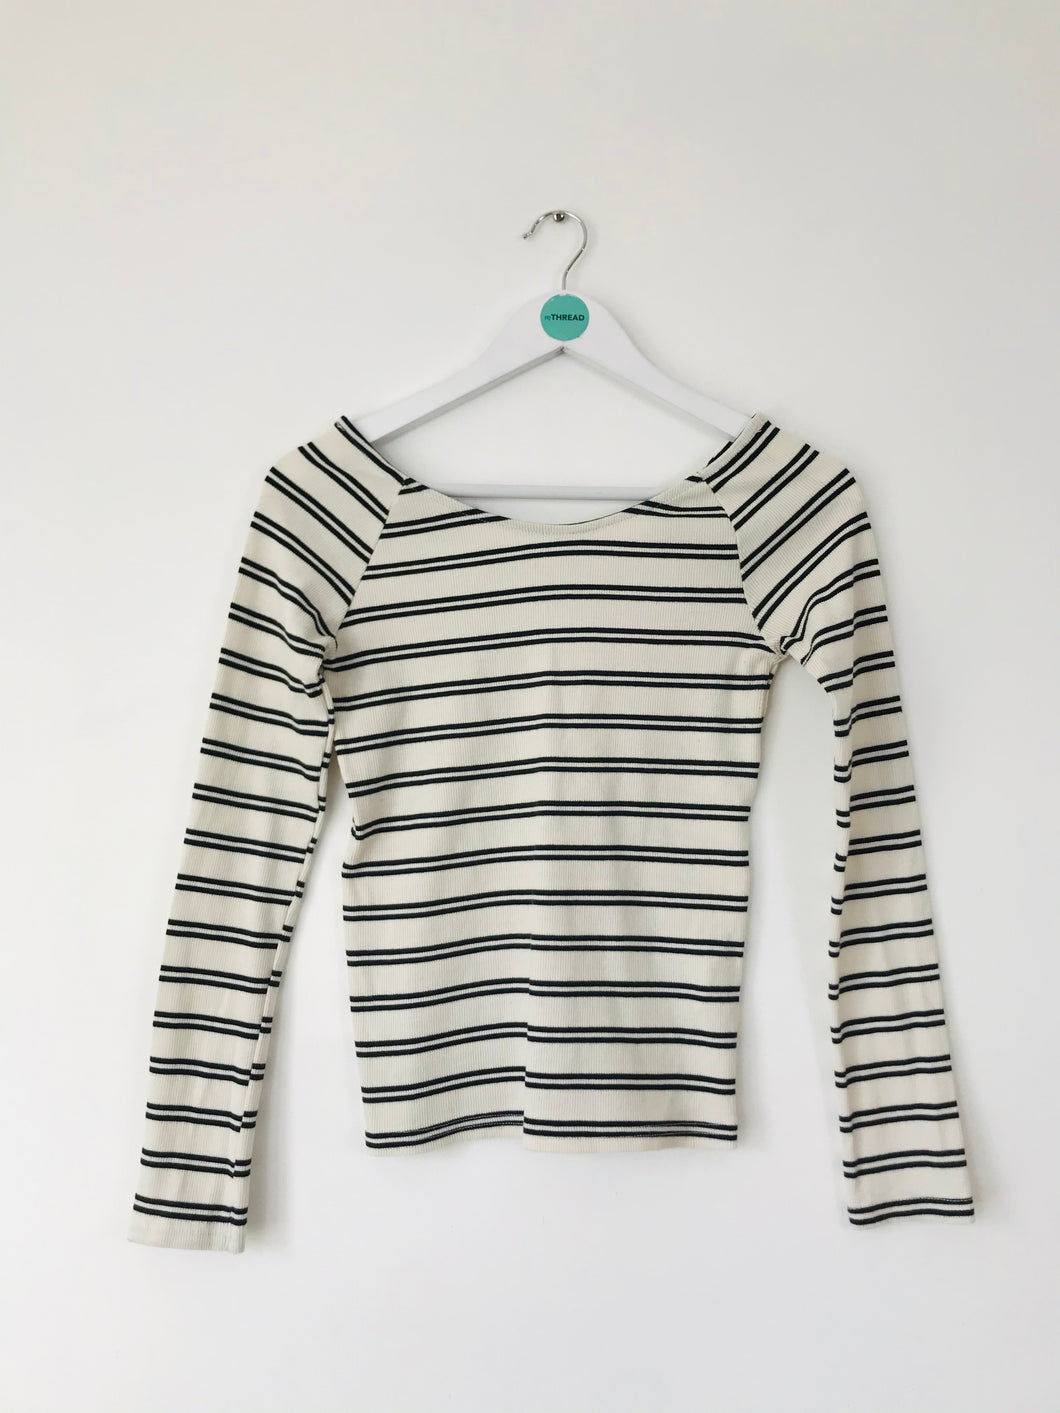 Zara Women’s Striped Wide Neck Shirt | M UK10 | Black and White